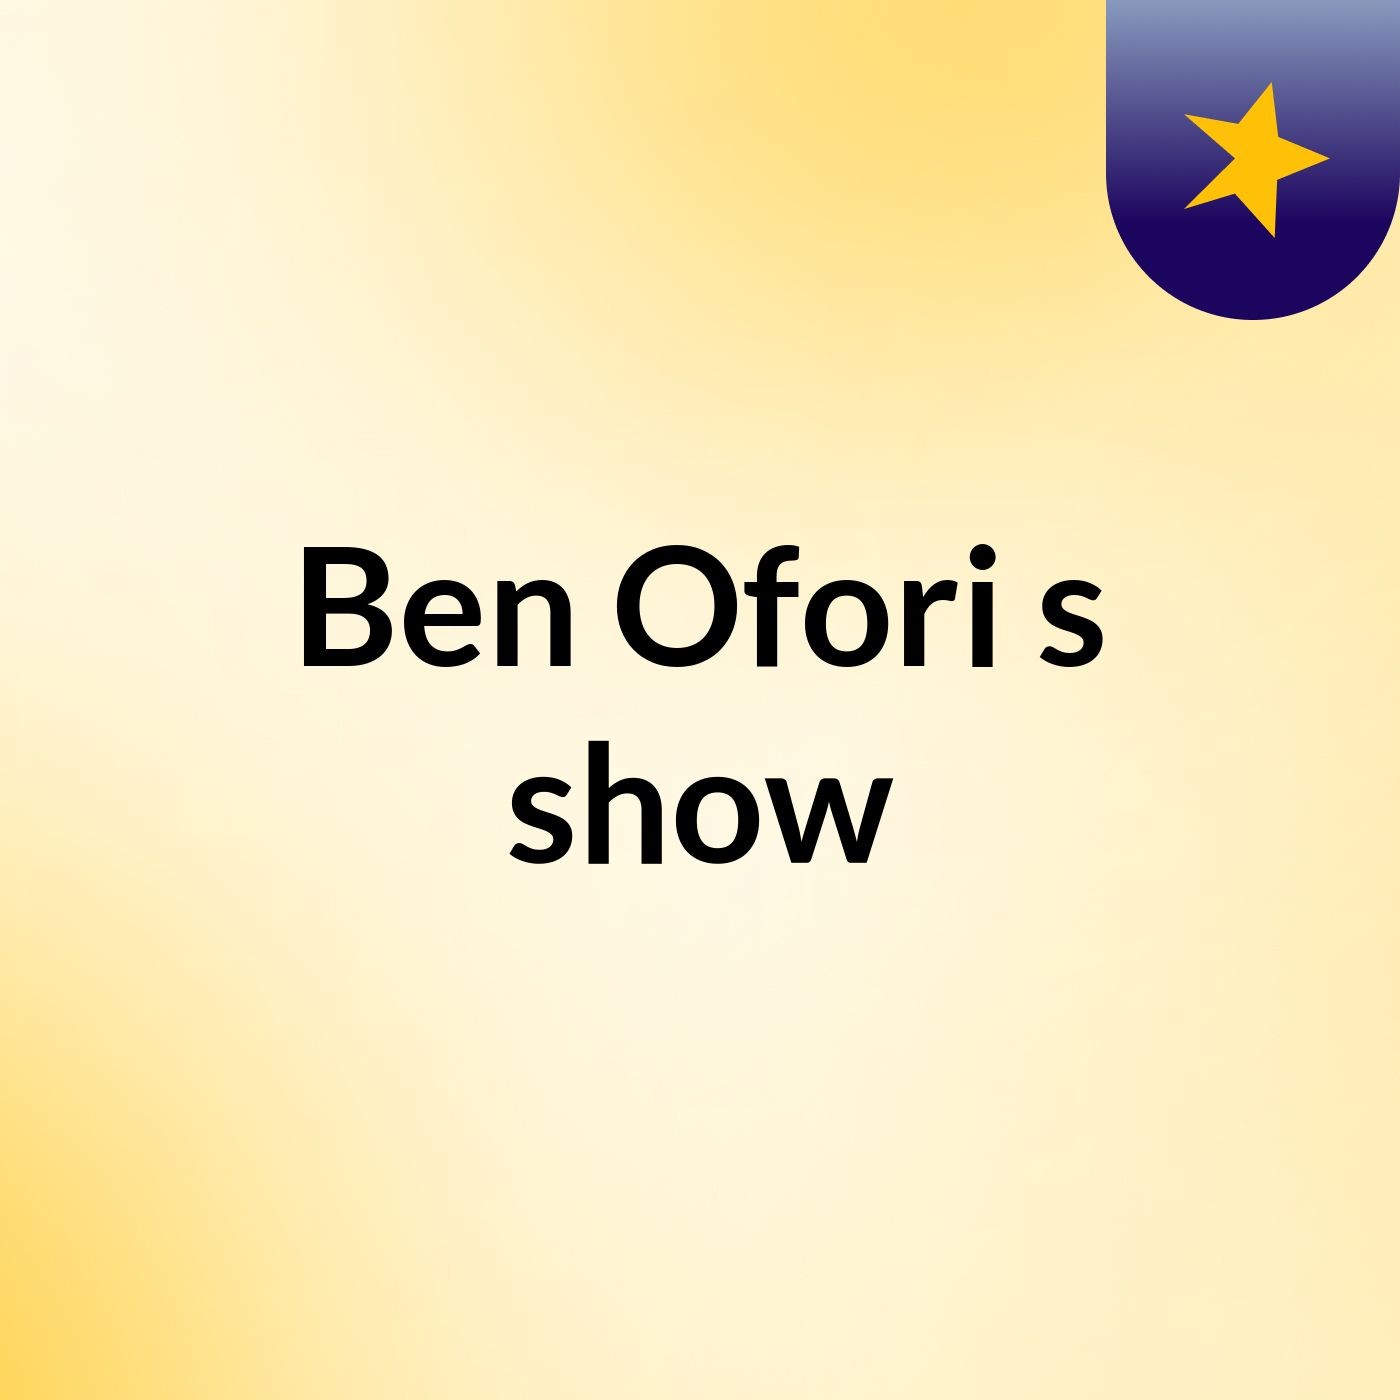 Ben Ofori's show